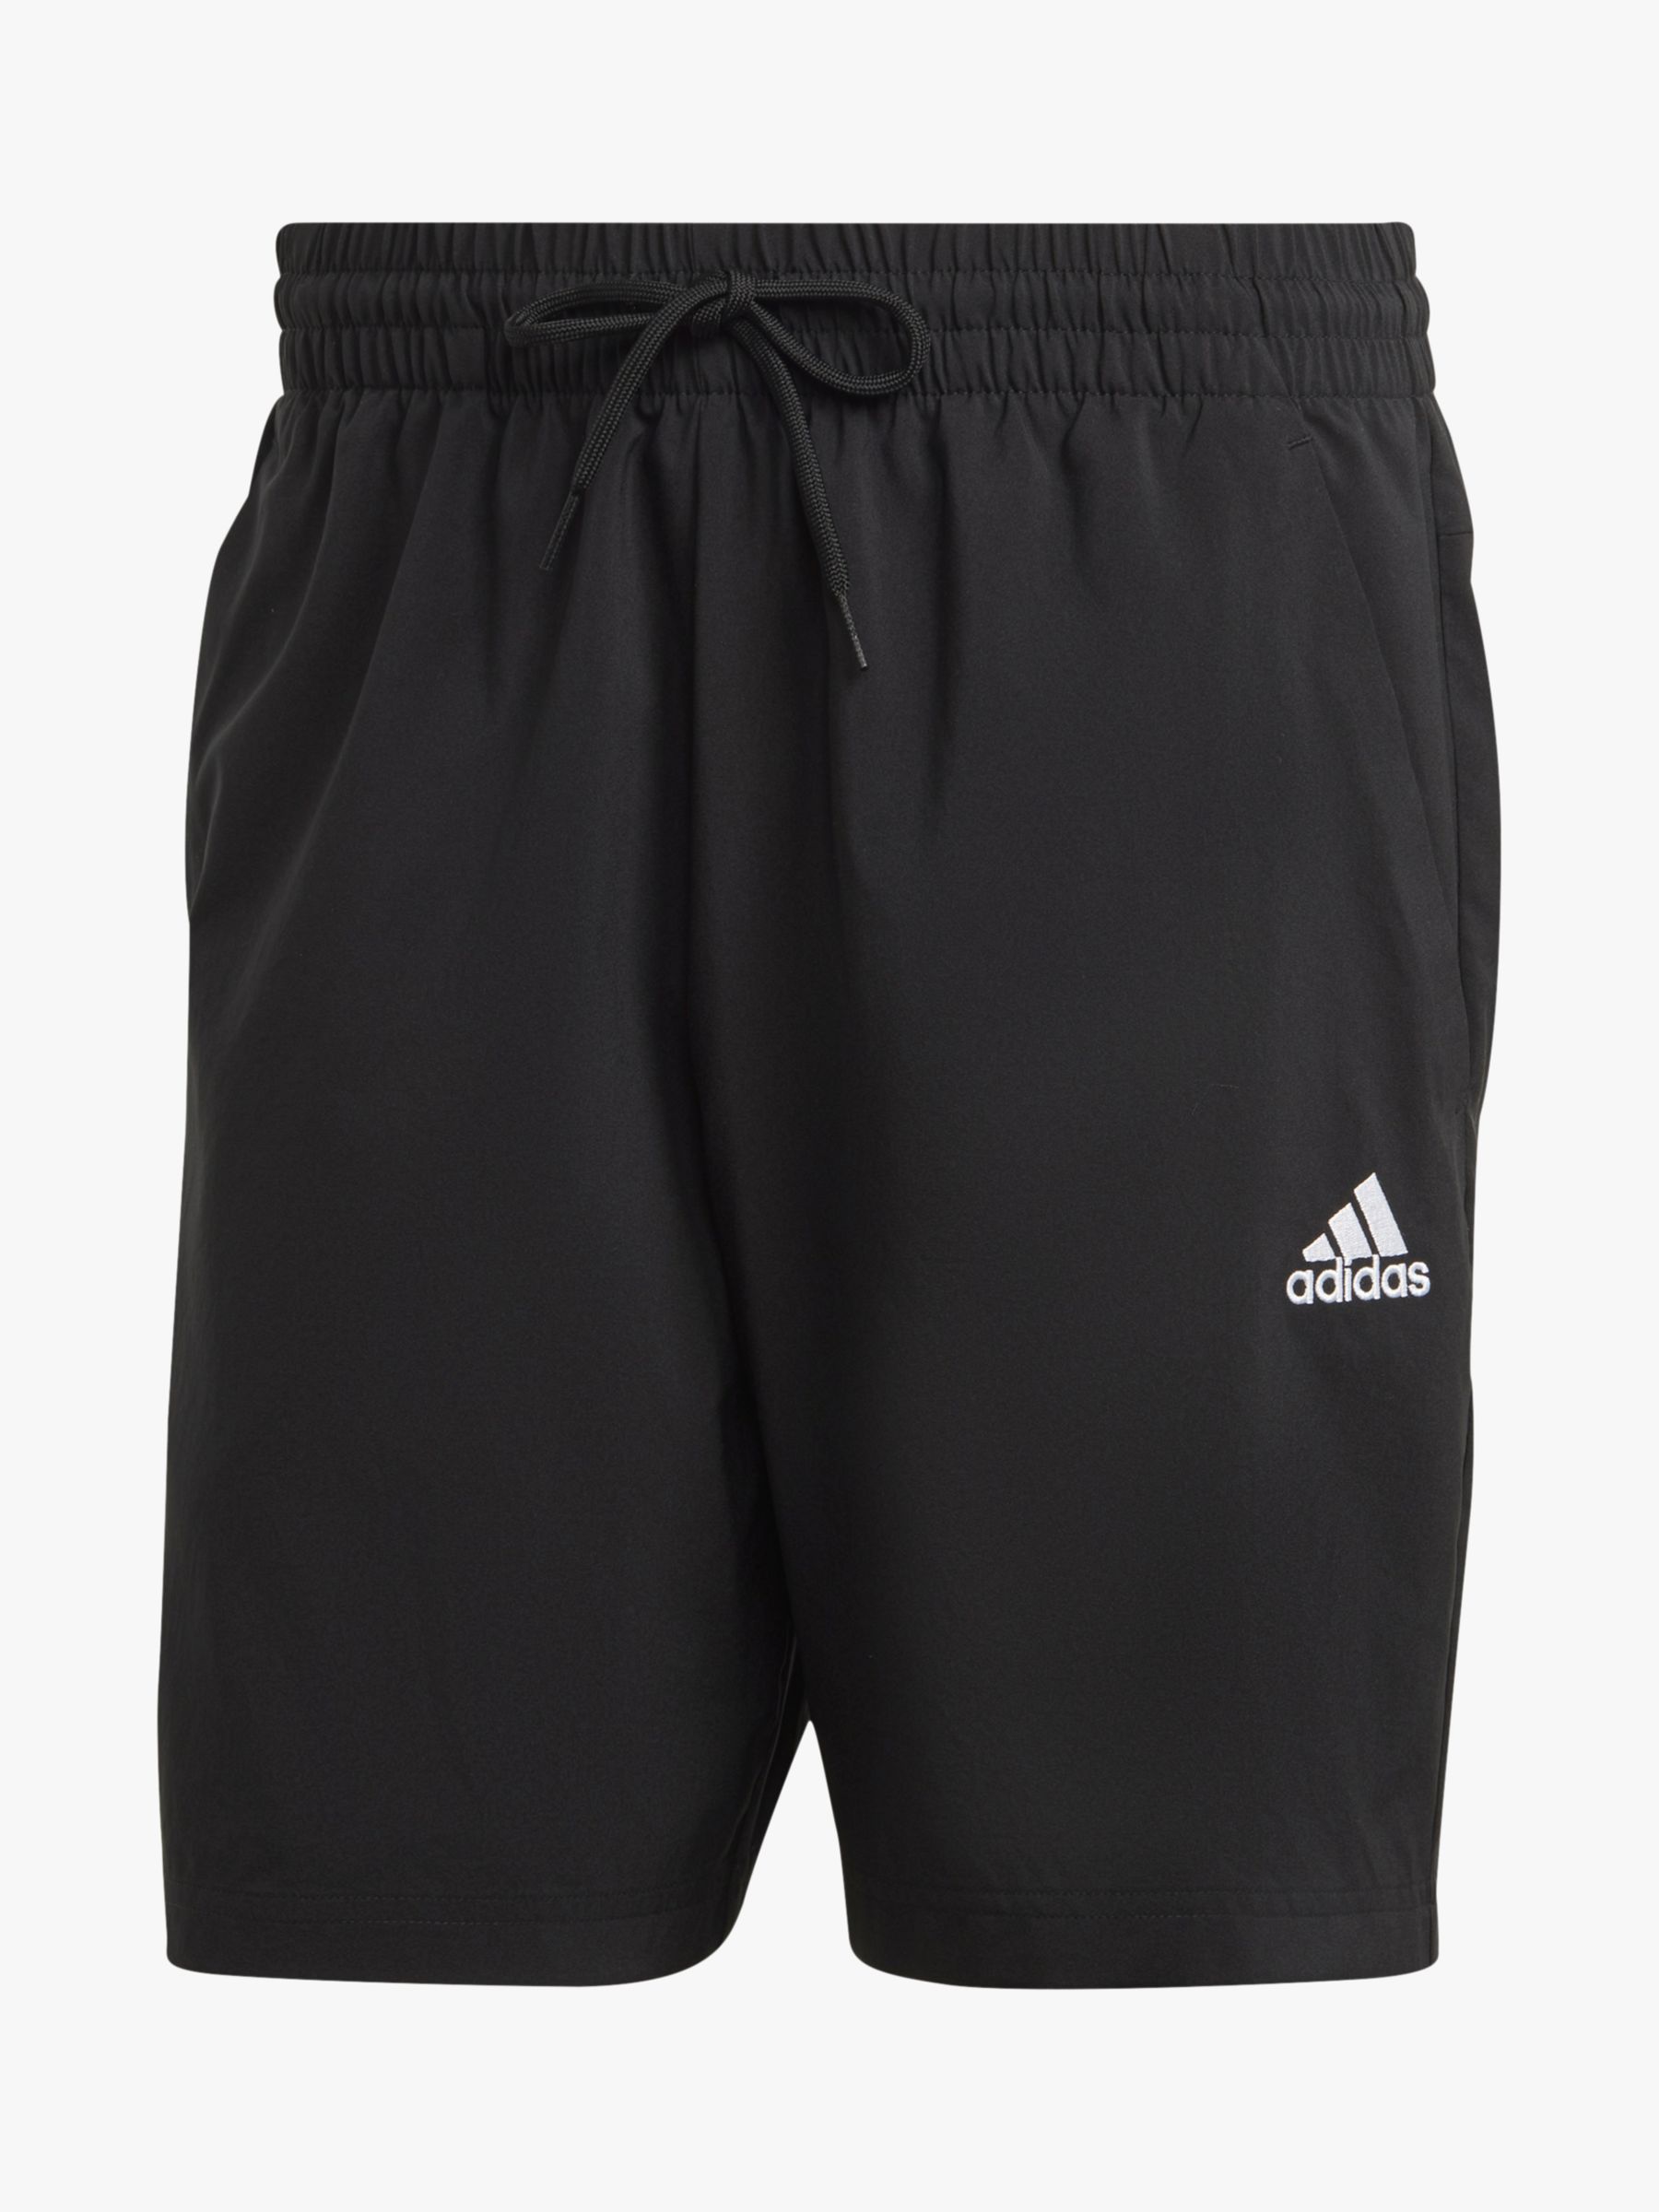 adidas AEROREADY Essentials Chelsea Small Logo Shorts, Black, S